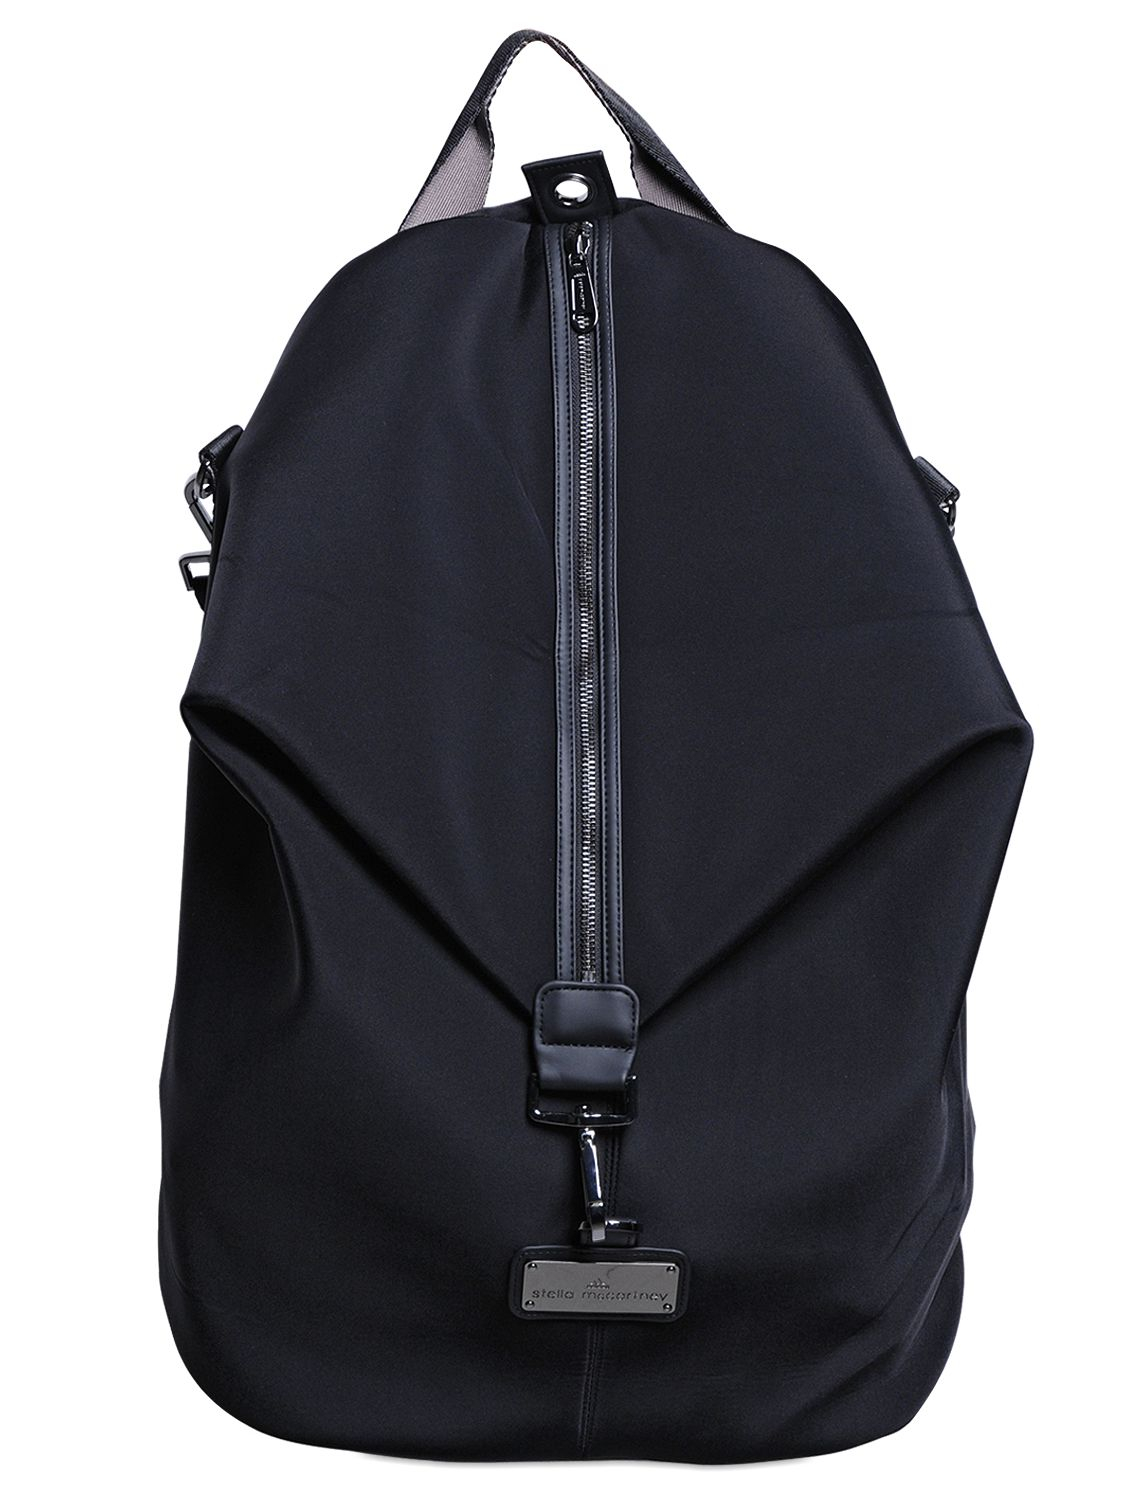 adidas By Stella McCartney Oversize Studio Backpack in Black - Lyst